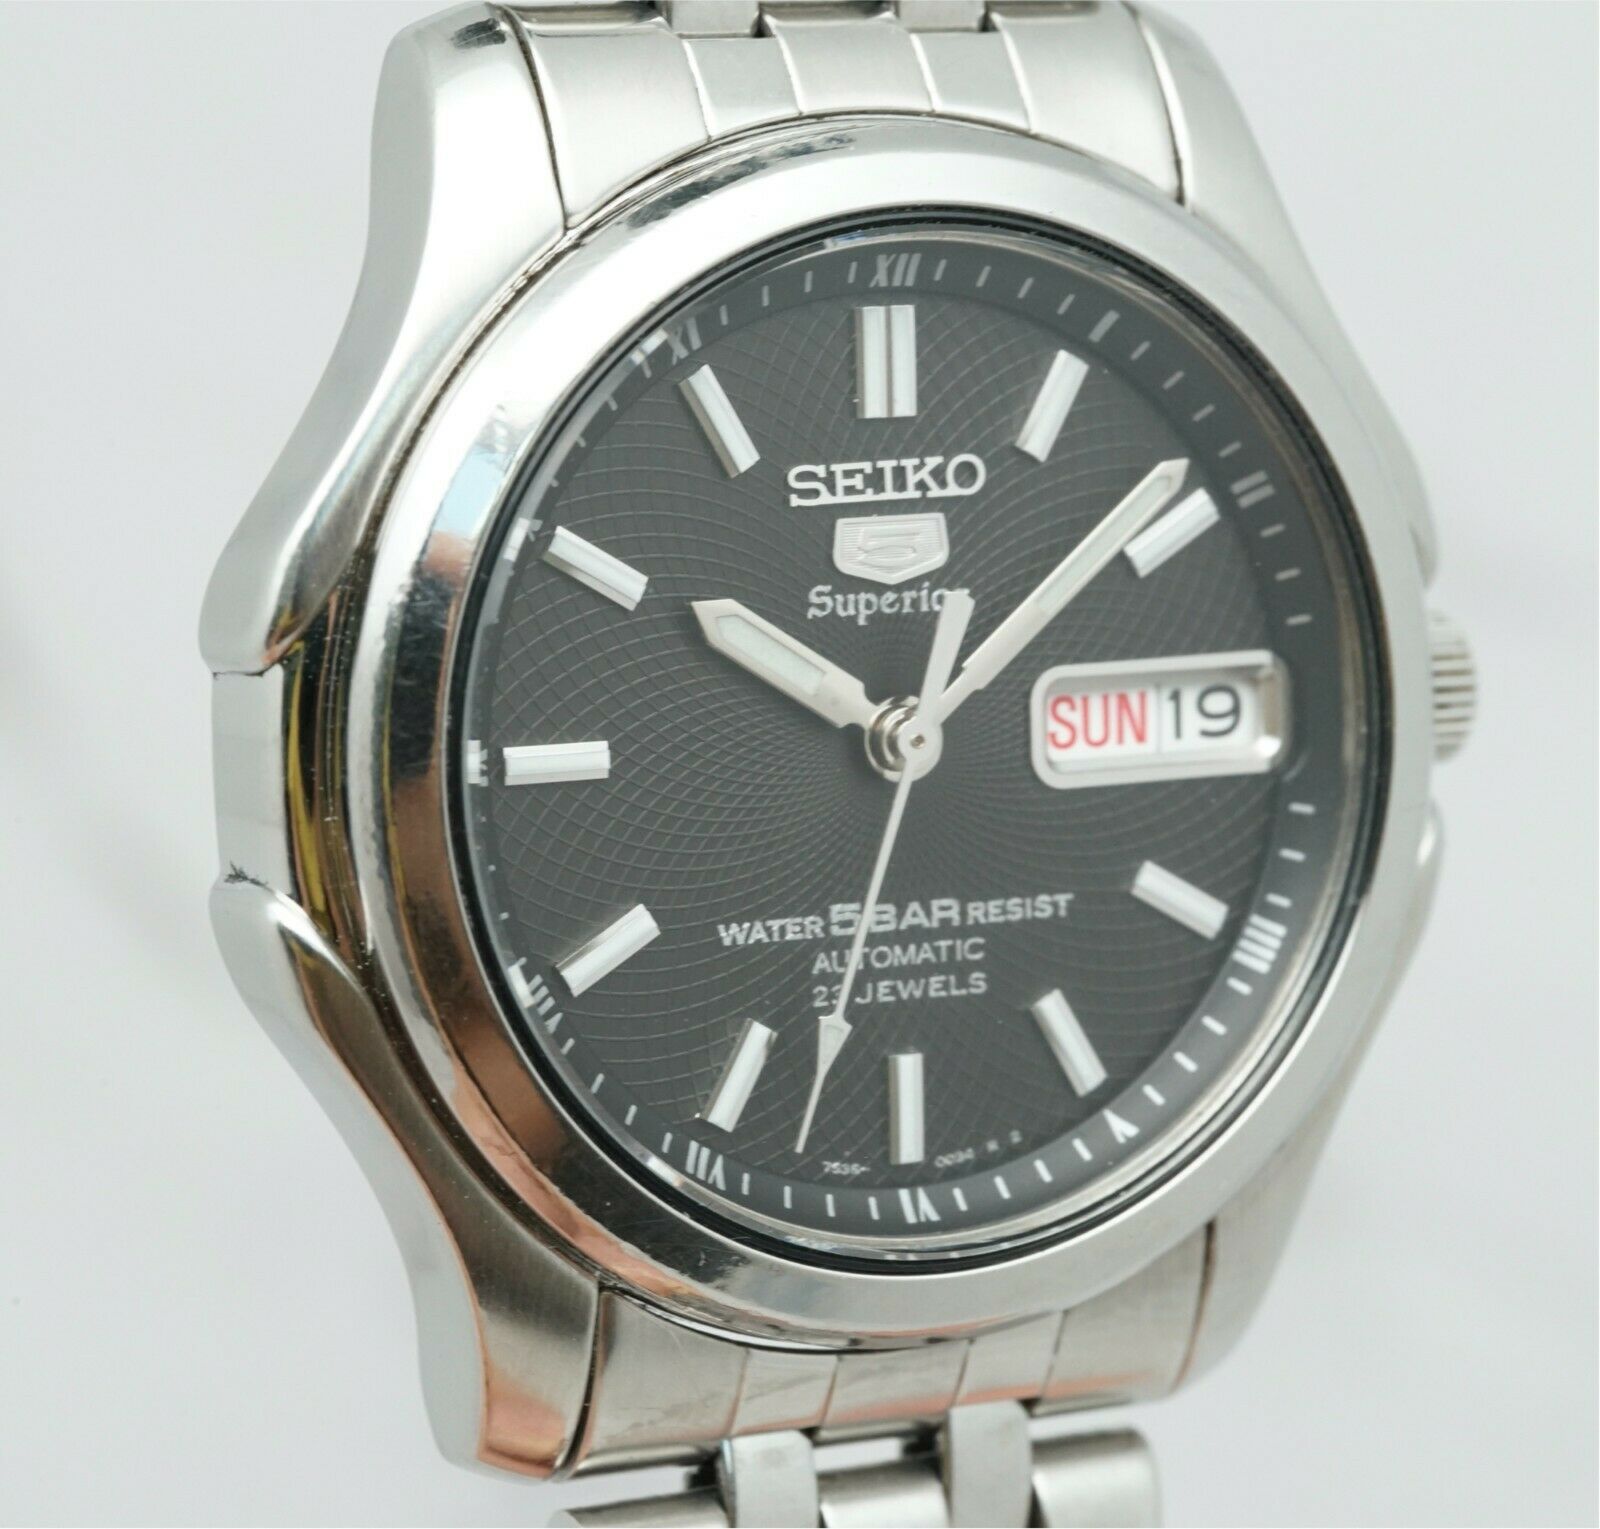 Rare Seiko 5 Superior SKZ025 Black Dial Automatic Sports Watch 7S36-0030 |  WatchCharts